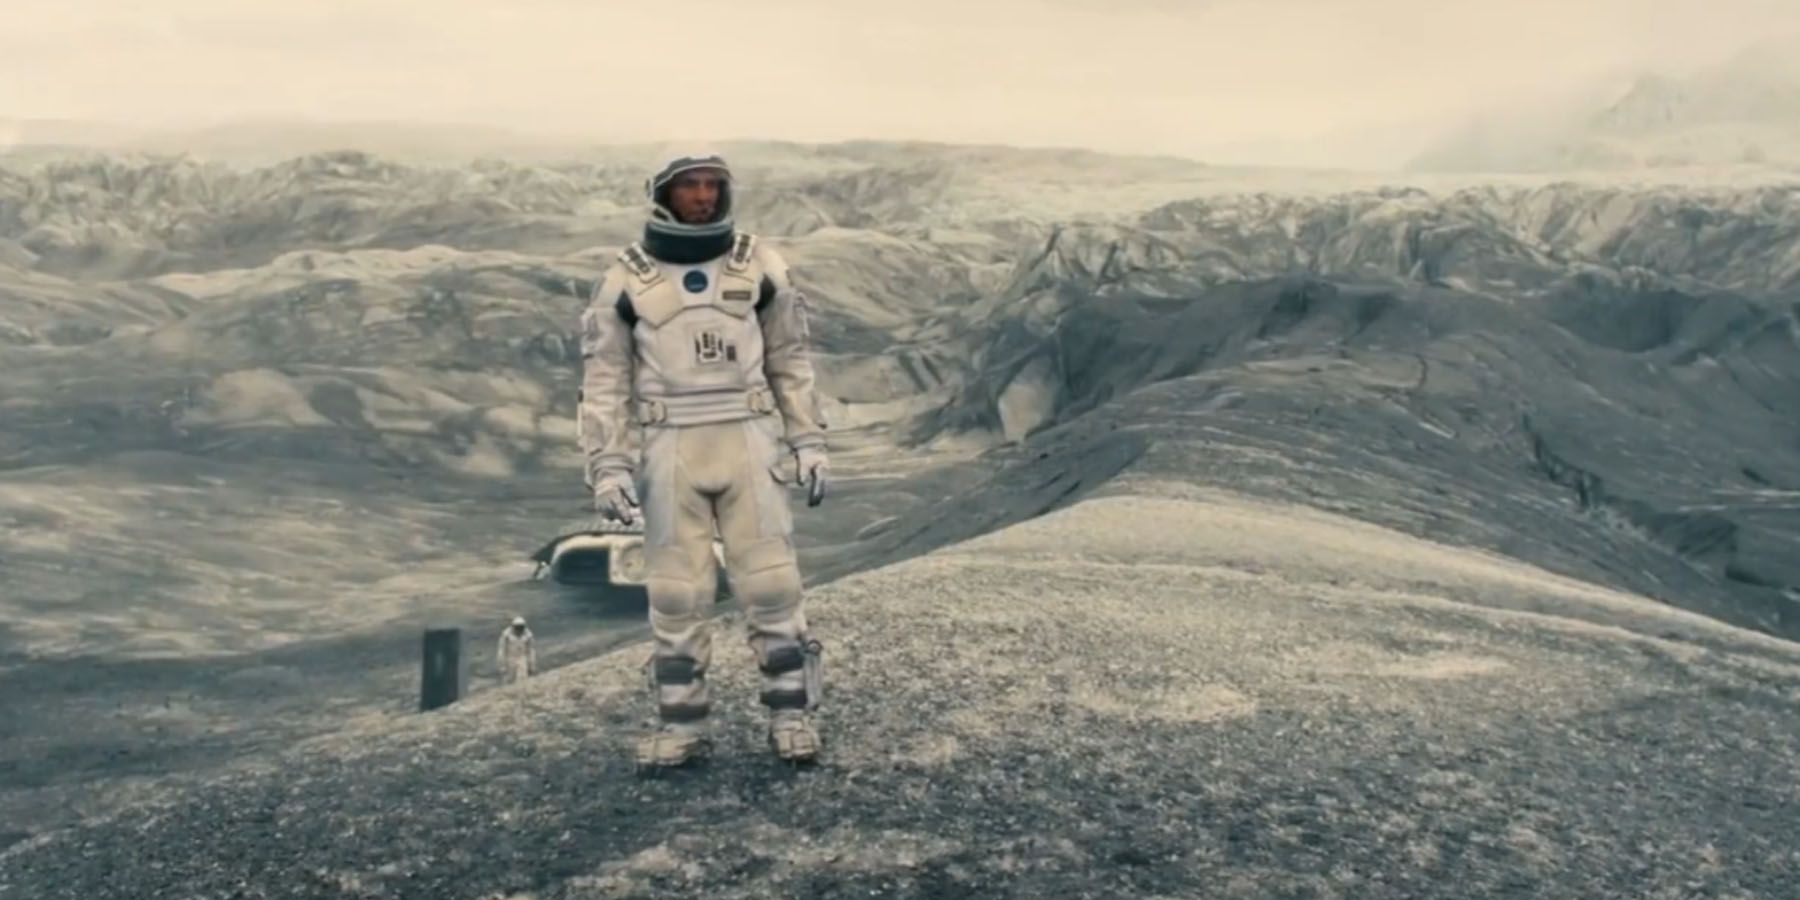 Interstellar astronaut standing on desolate mountainous planet